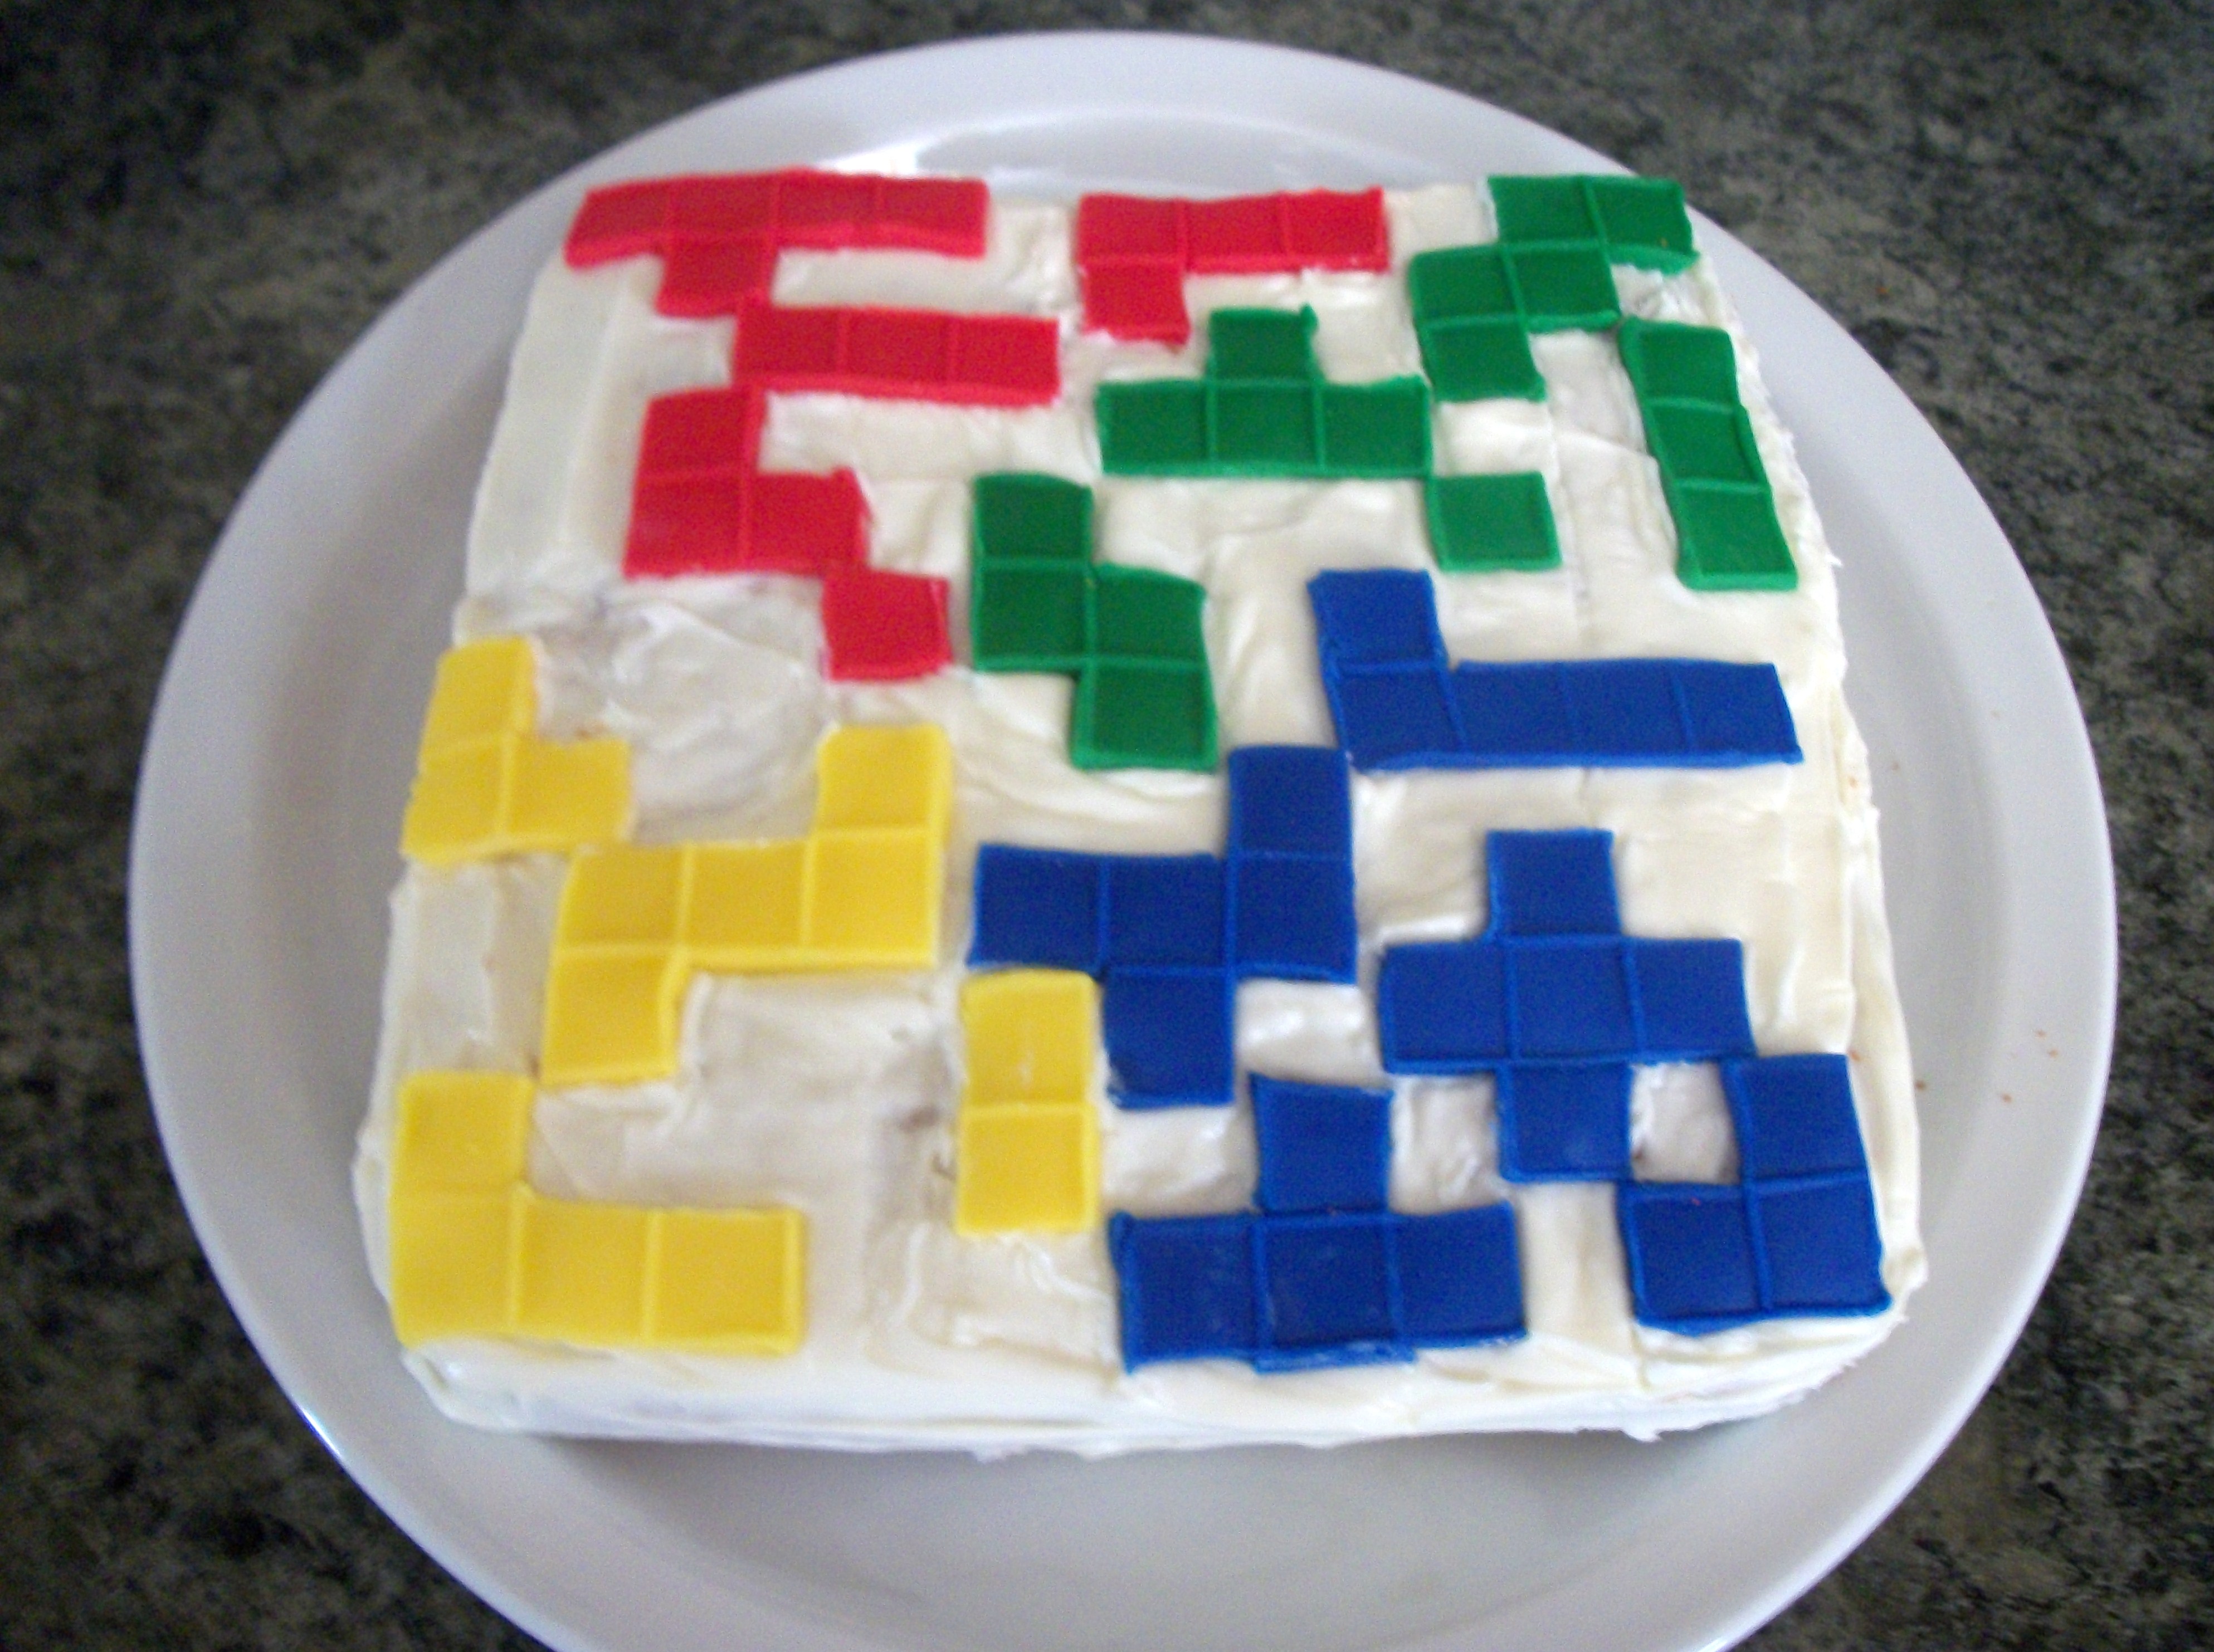 How to Make a Blokus Game Cake